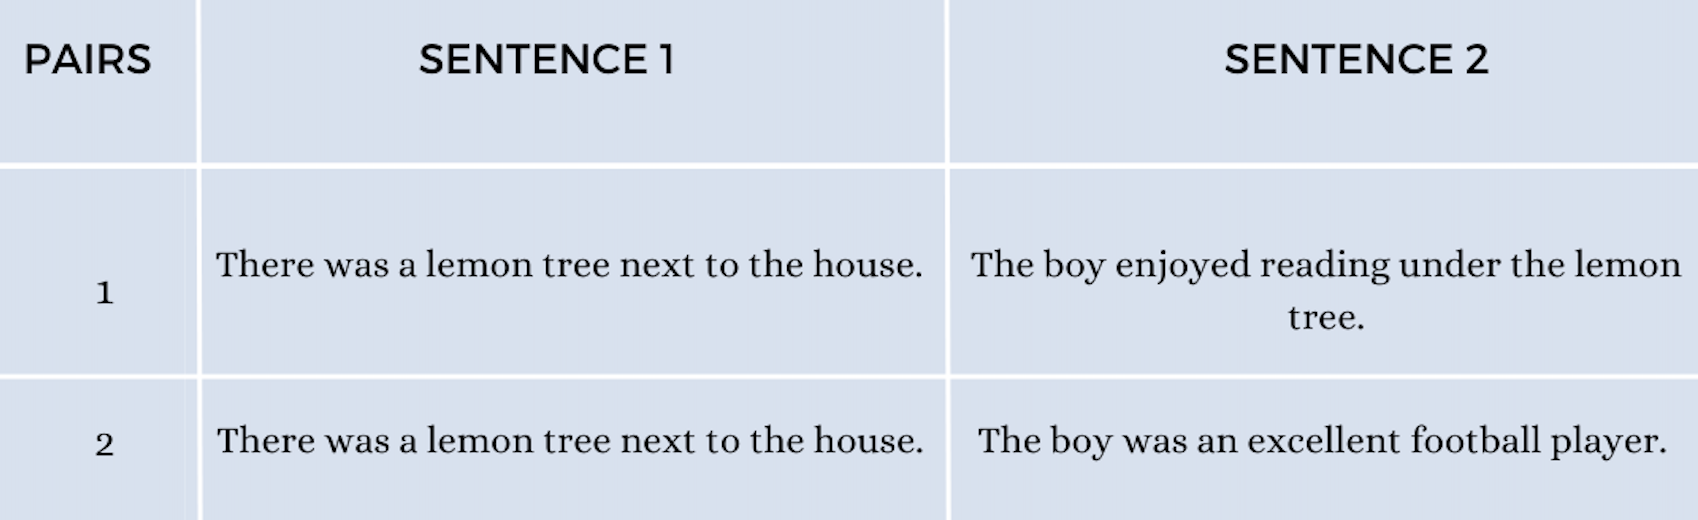 sentence pairs